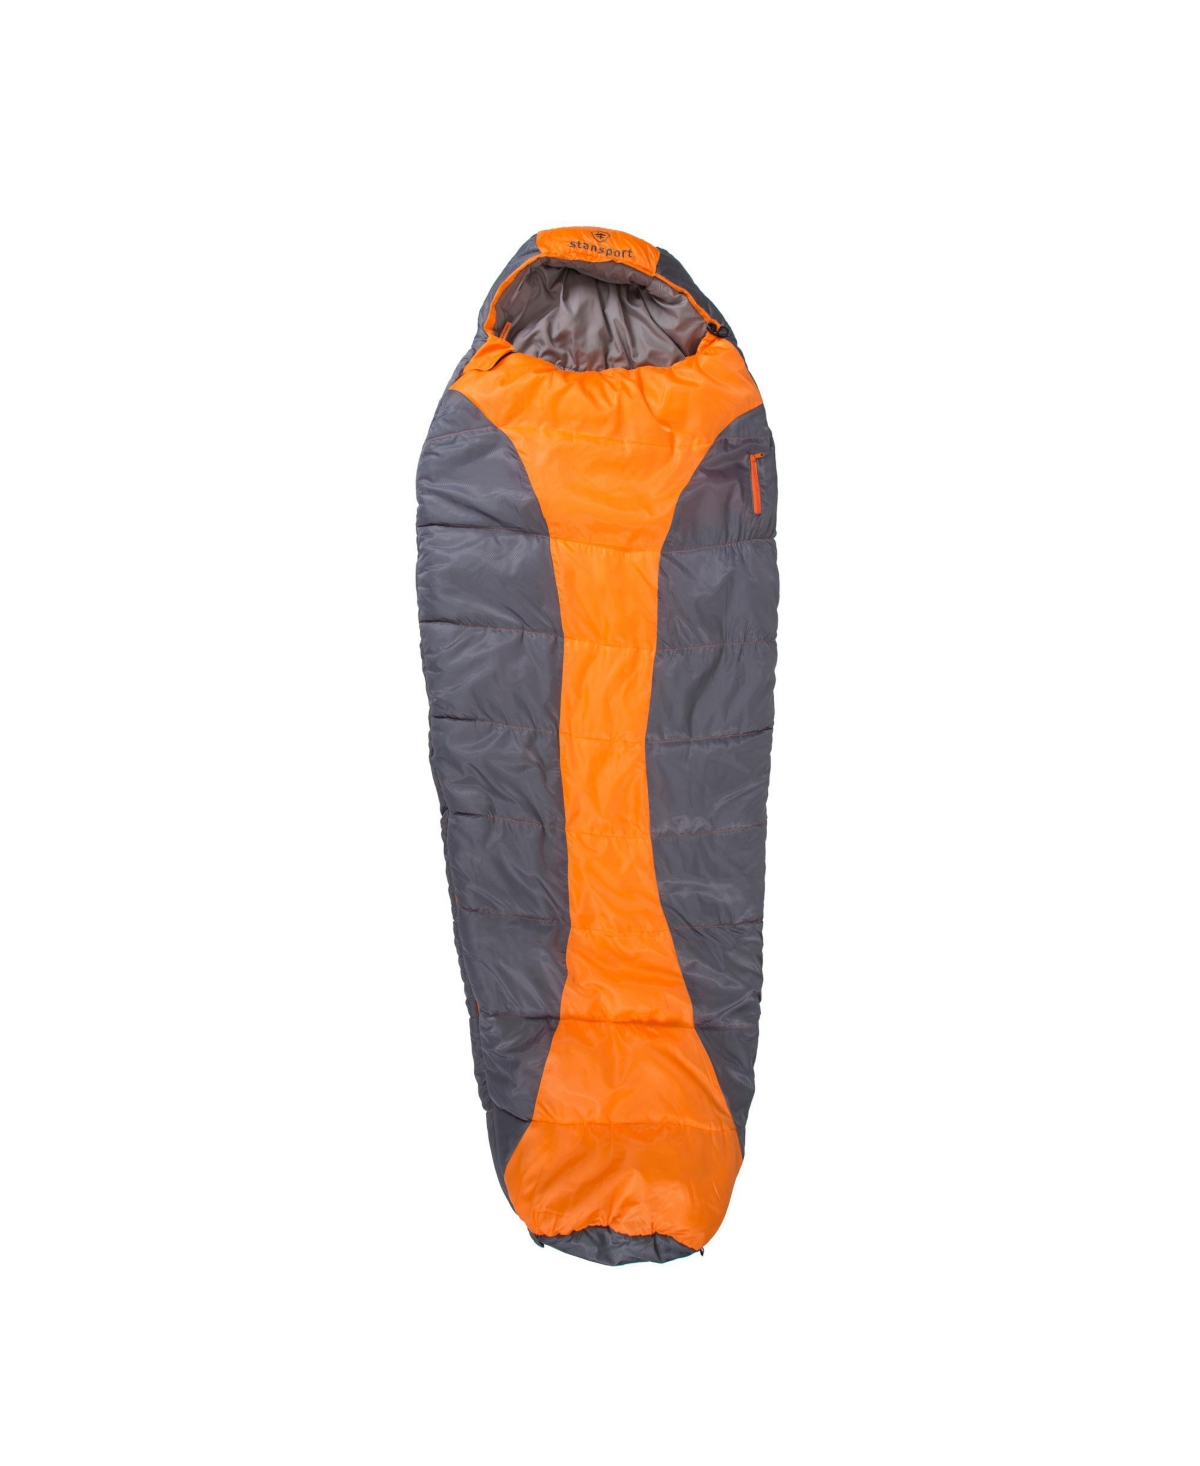 Stan sport 3.1 lbs. Glacier Sleeping Bag - Orange